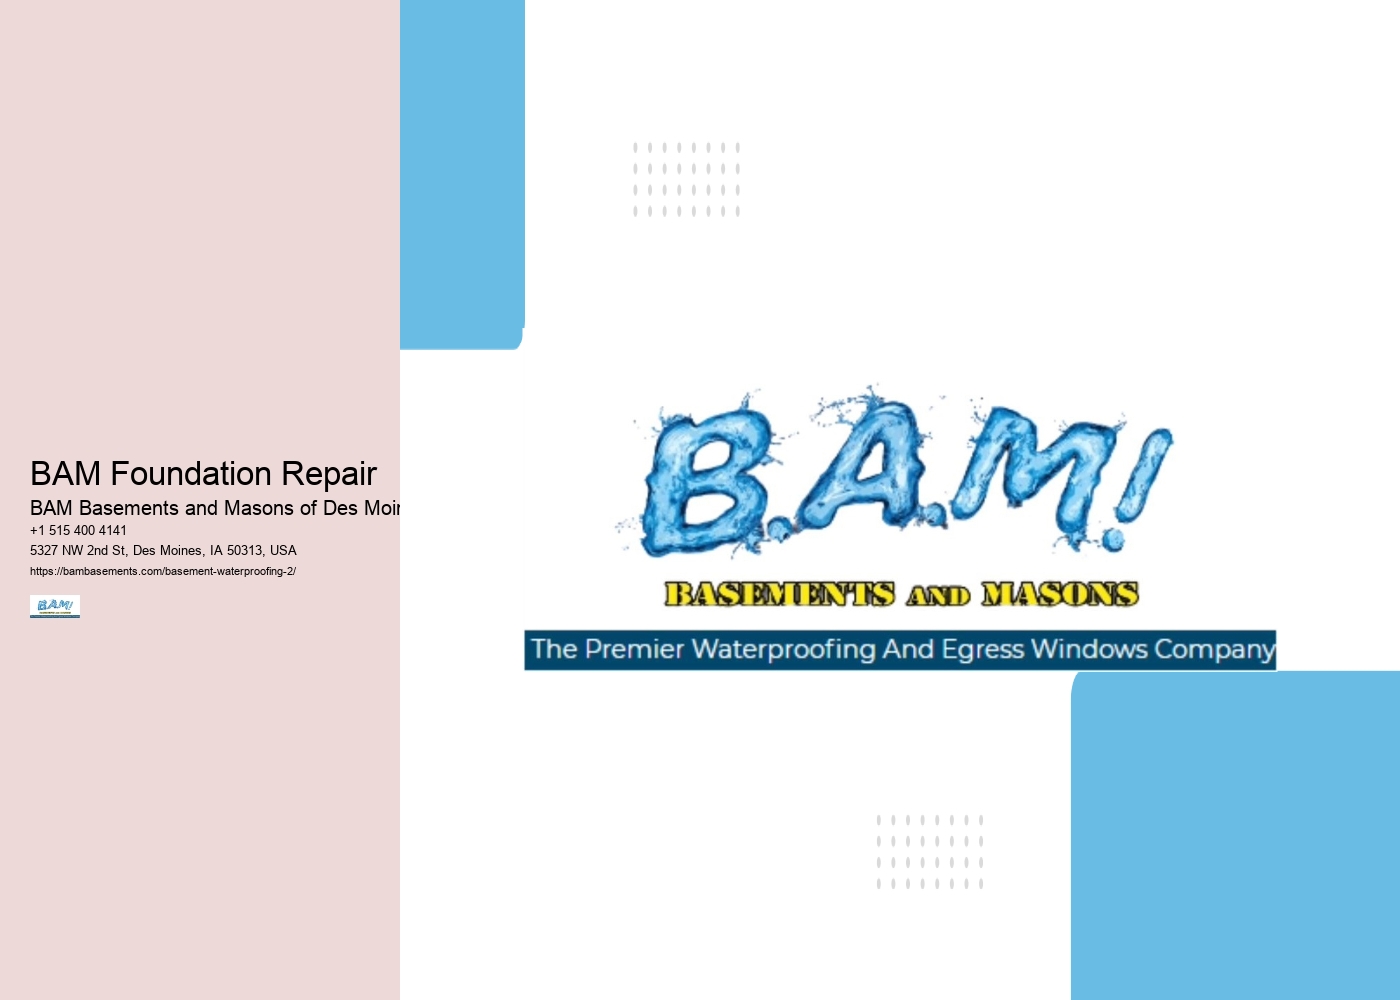 BAM Foundation Repair